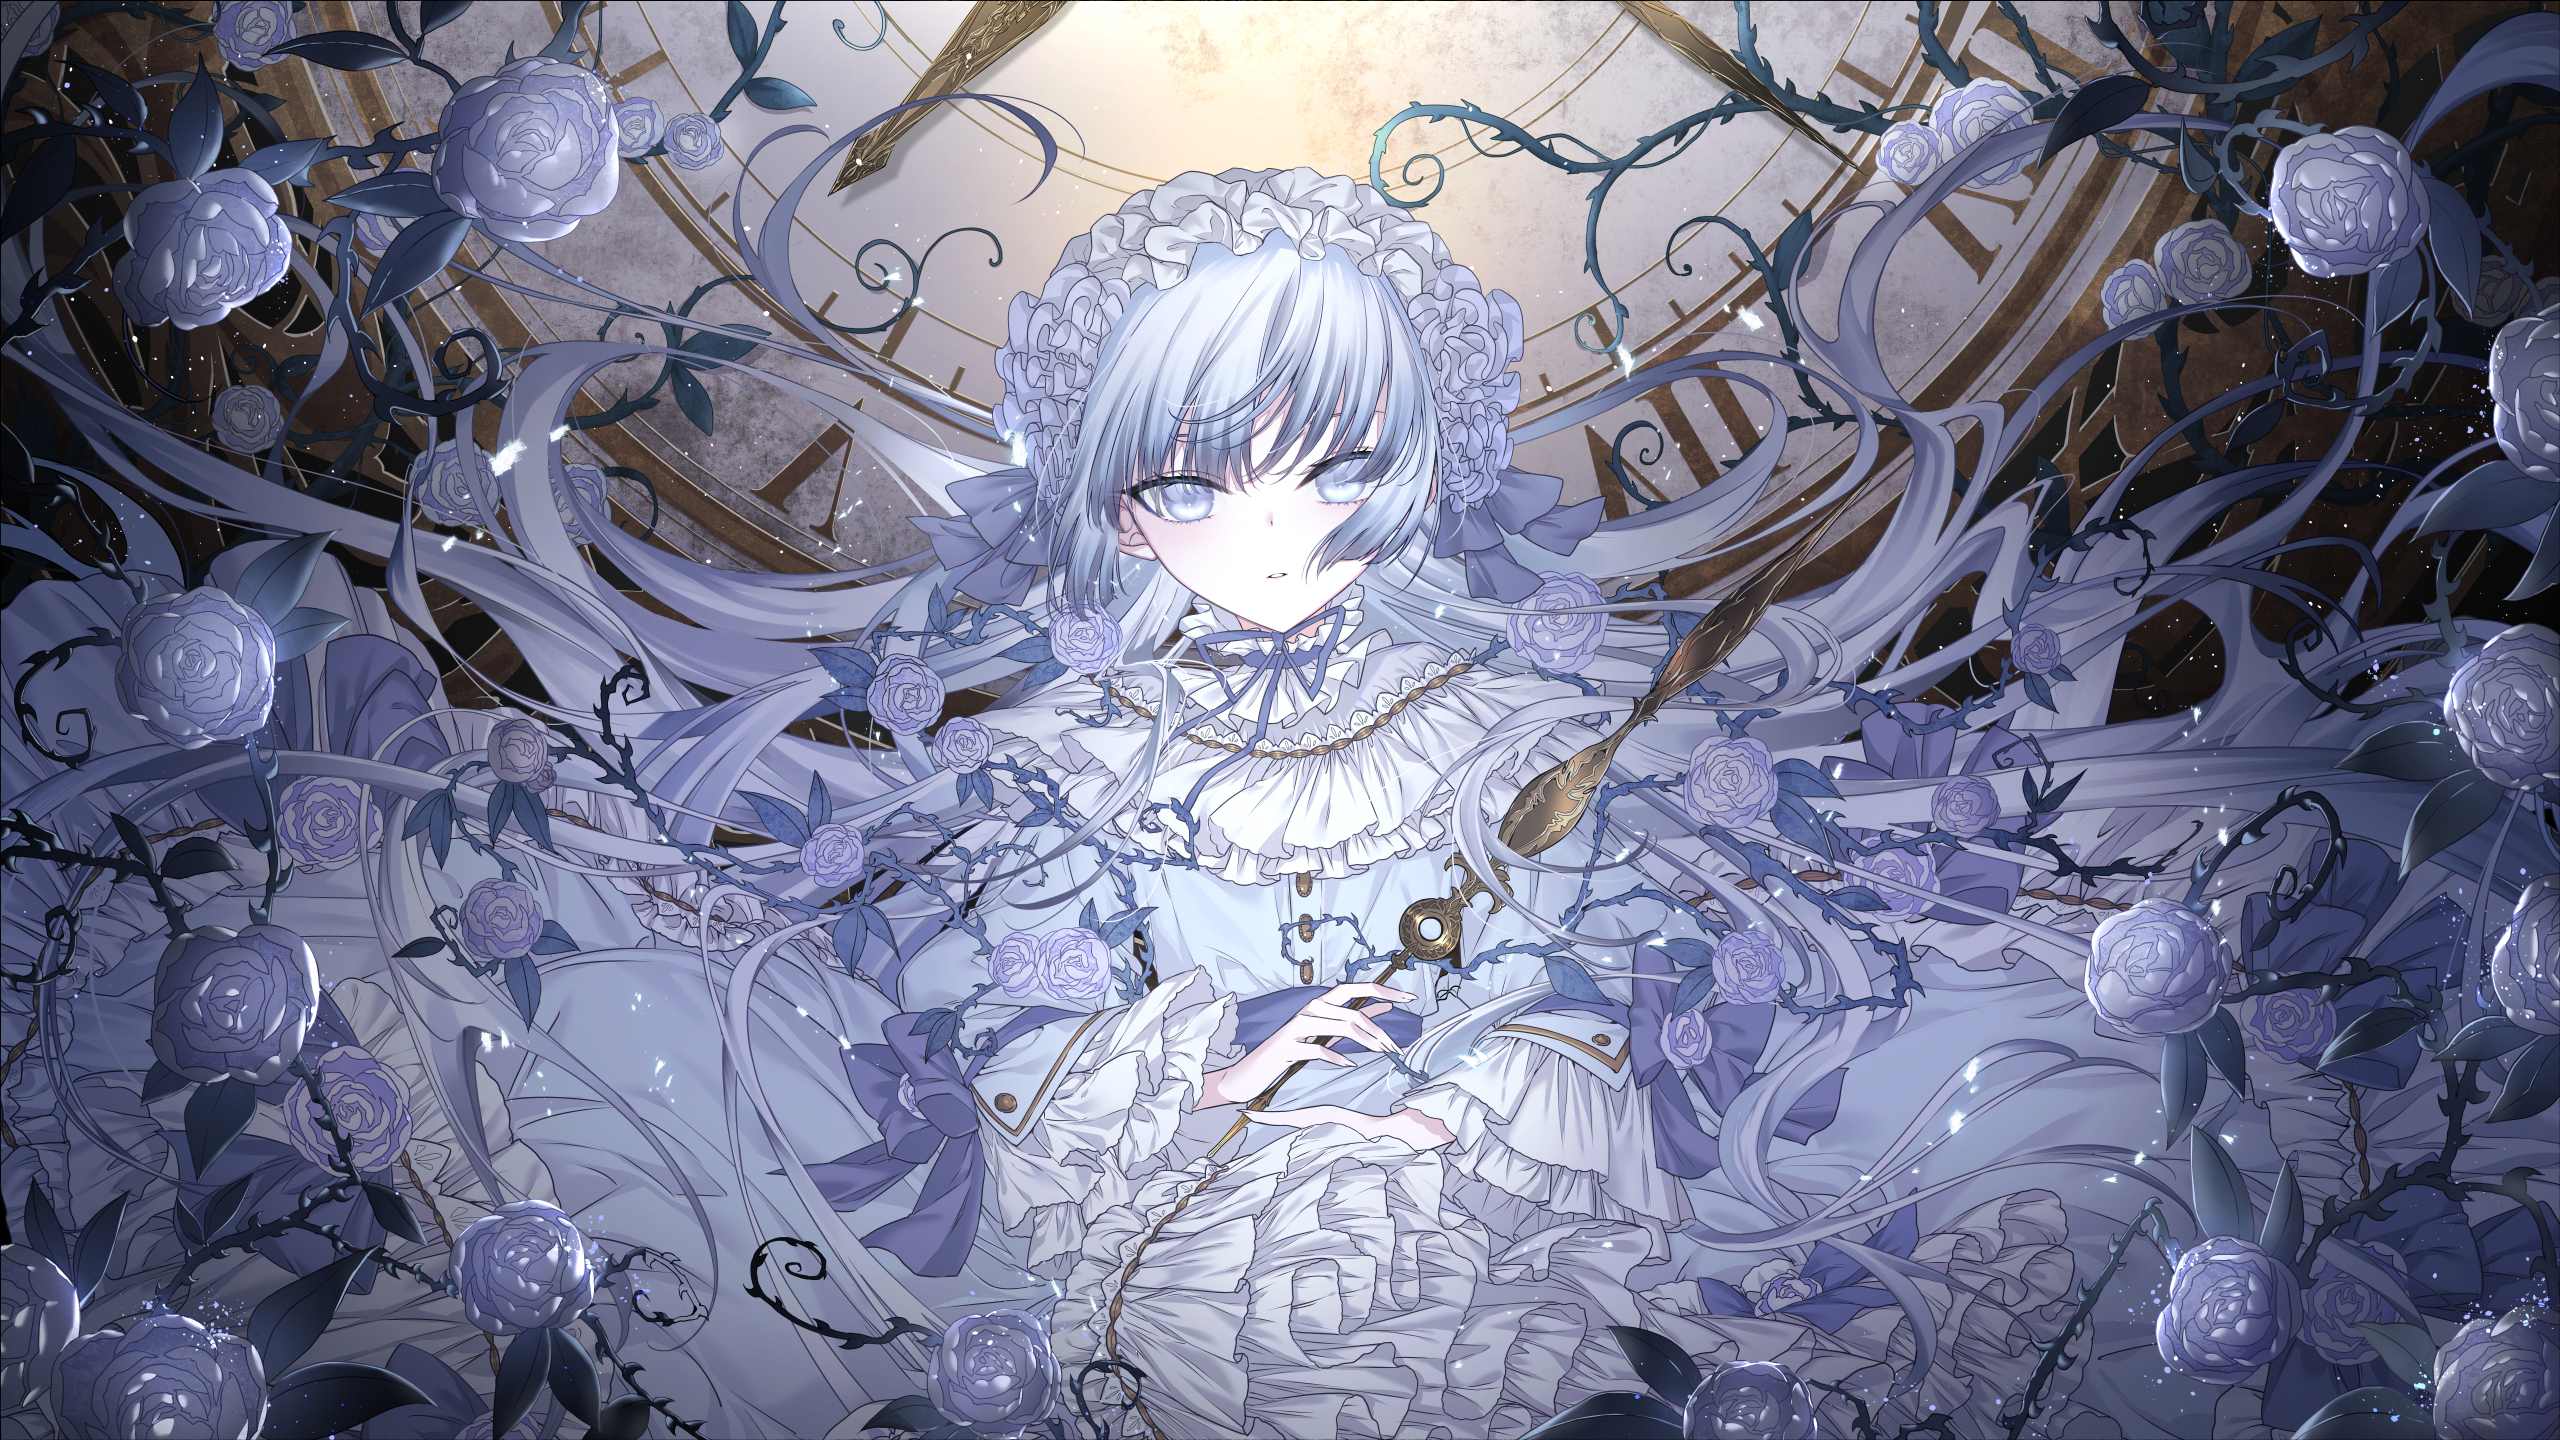 Anime Girls Anime Illustration Boyce Avenue Silver Eyes Silver Hair Rose Leaves Vines Looking At Vie 2560x1440